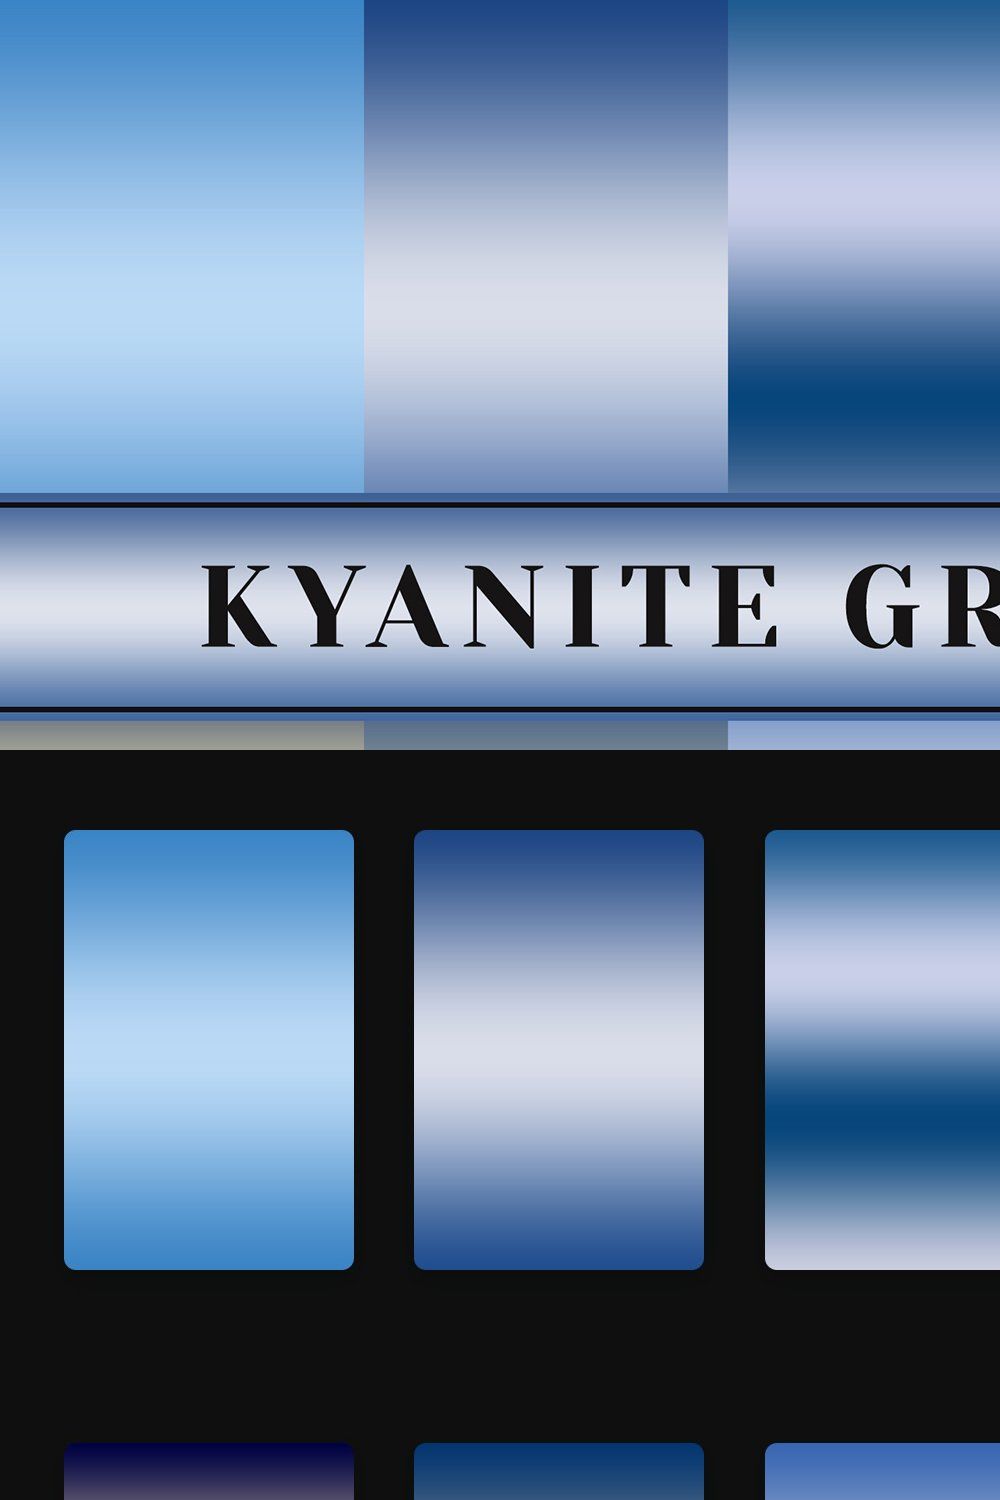 Kyanite Gradients pinterest preview image.